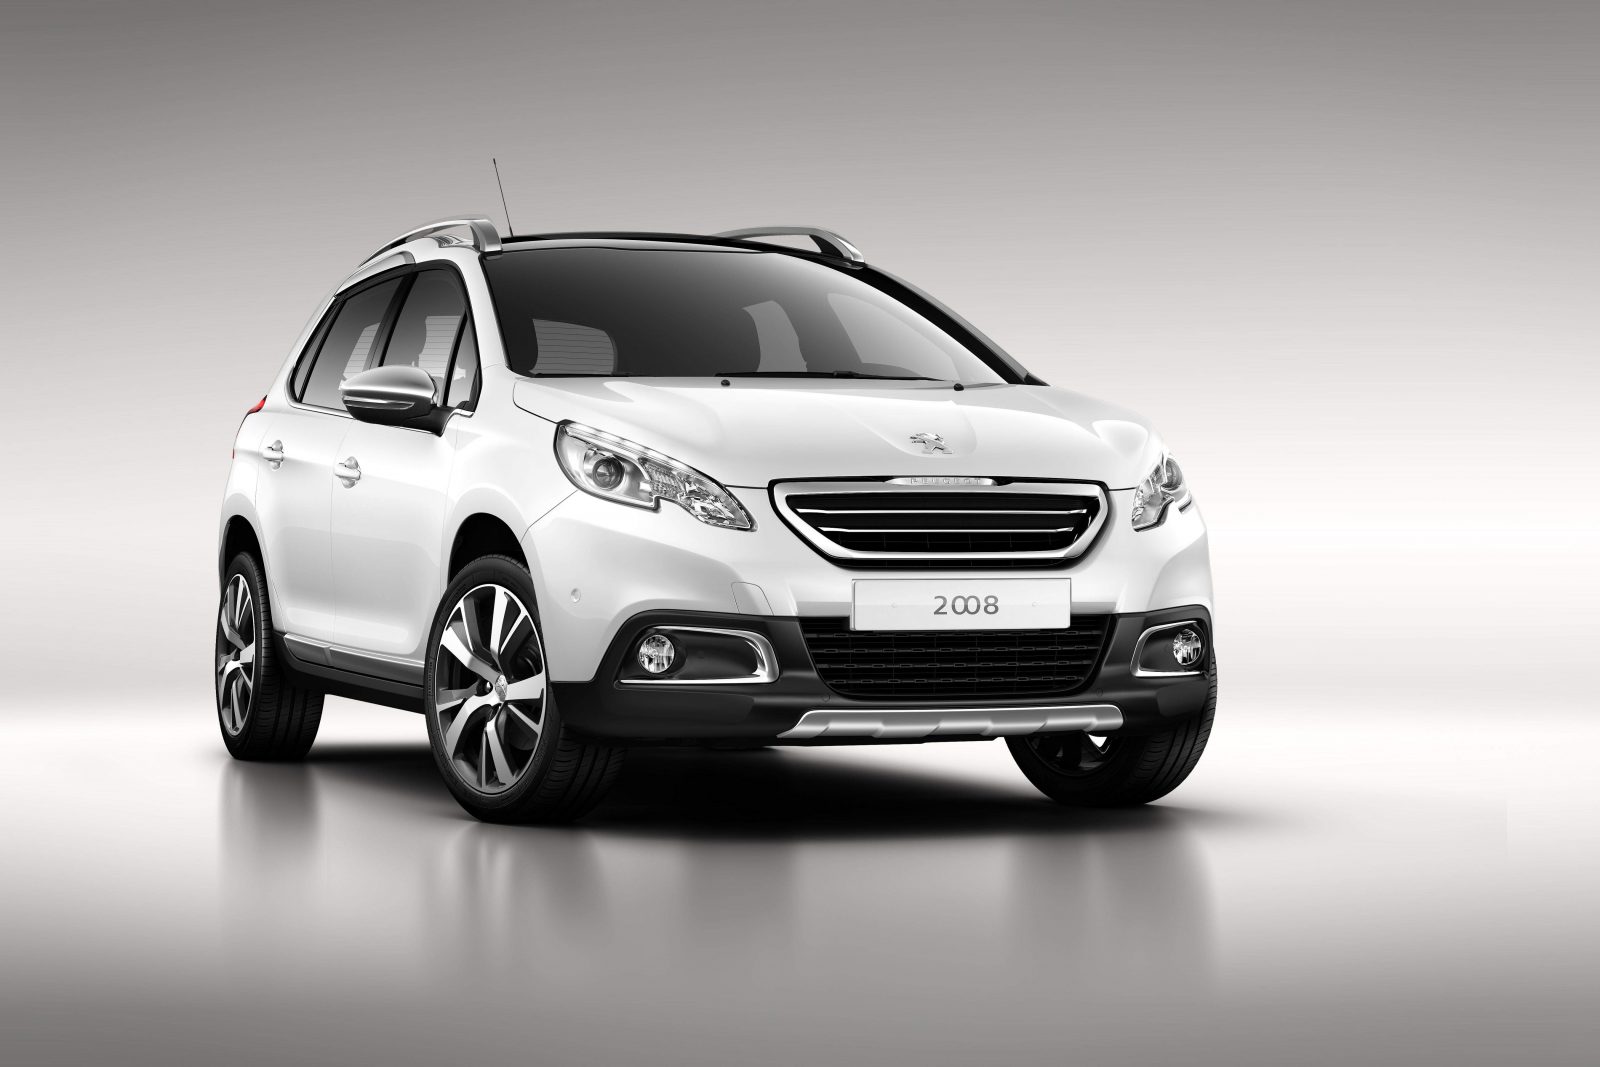 Porast svjetske prodaje grupe PSA Peugeot Citroën, Life.ba